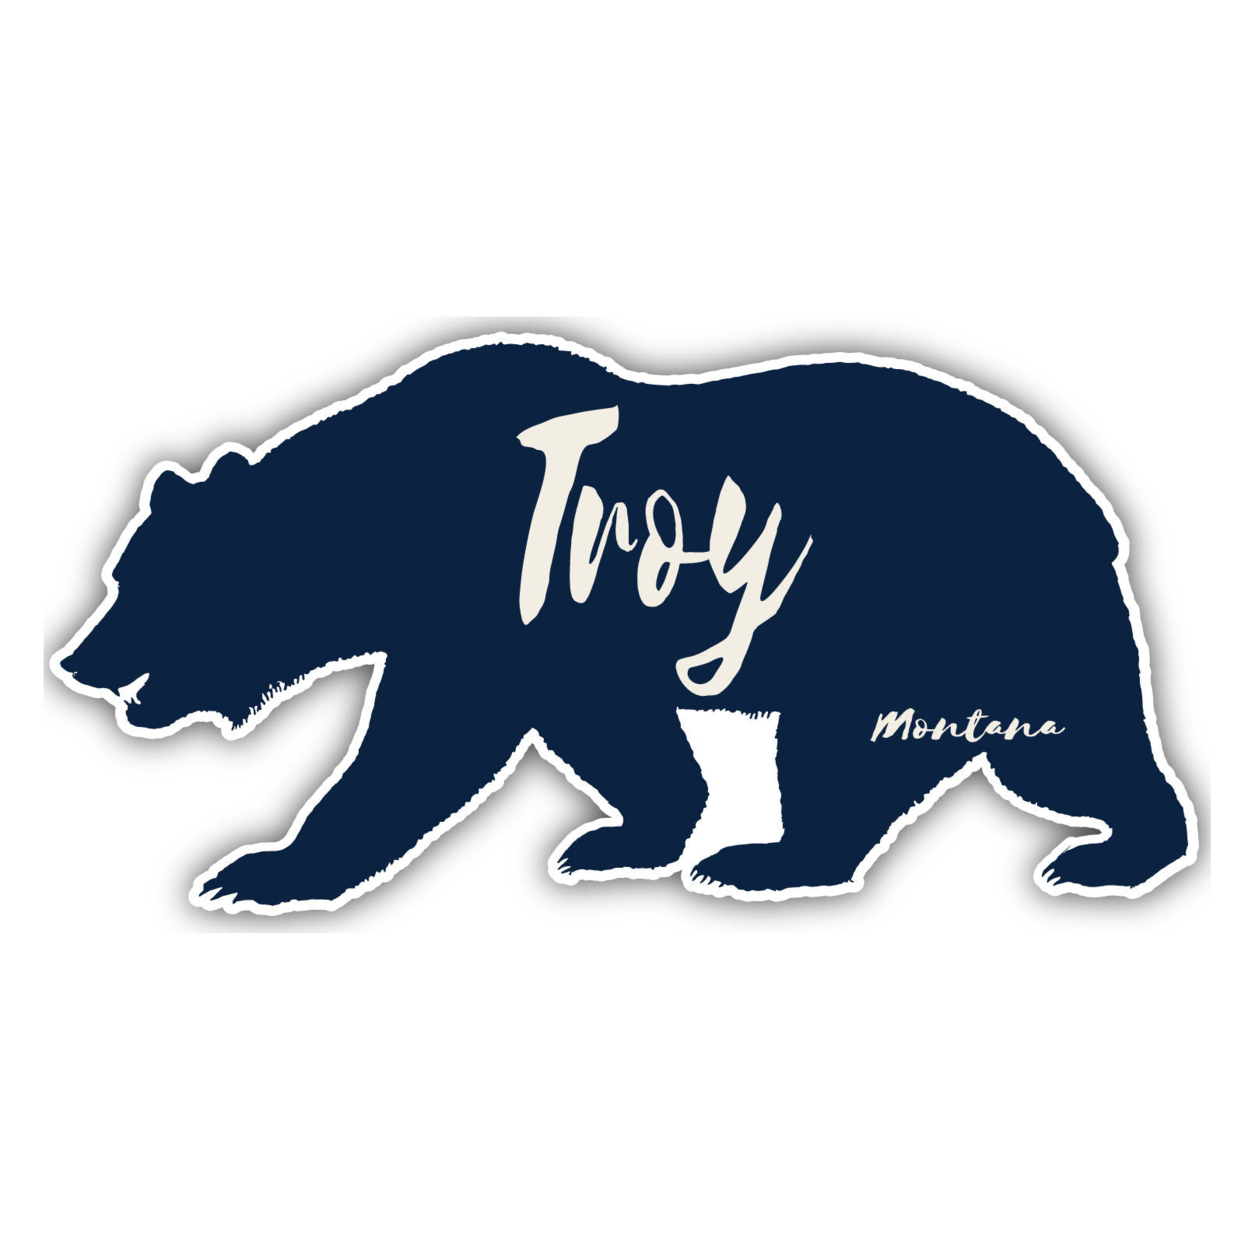 Troy Montana Souvenir Decorative Stickers (Choose Theme And Size) - Single Unit, 4-Inch, Bear